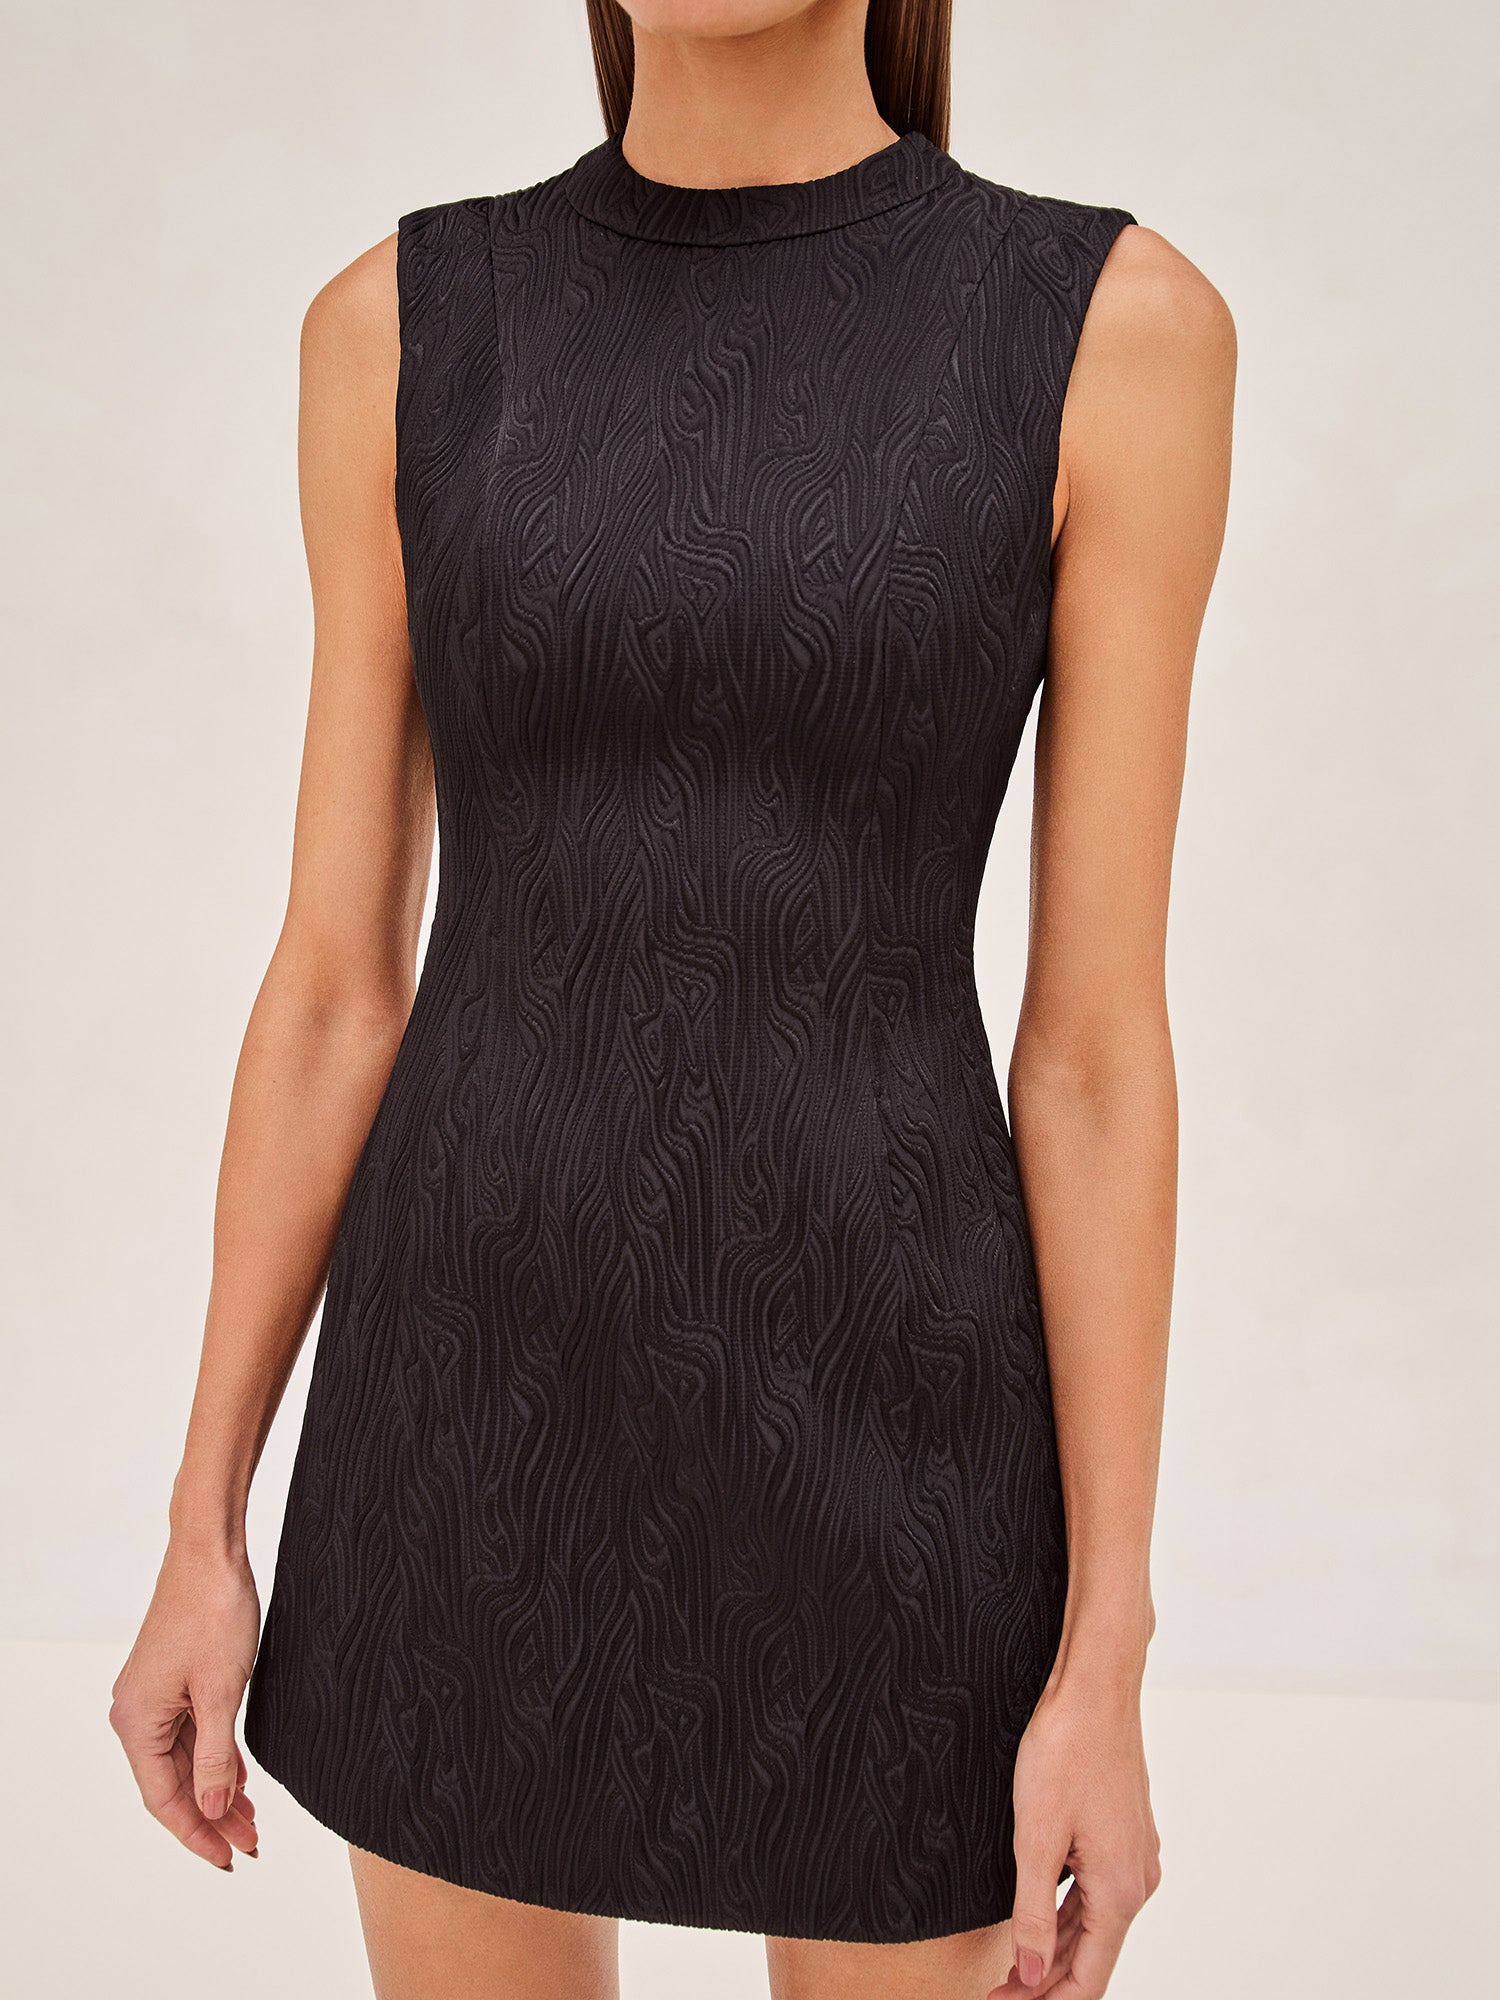 Alexis Andria sleevless mini dress in black.